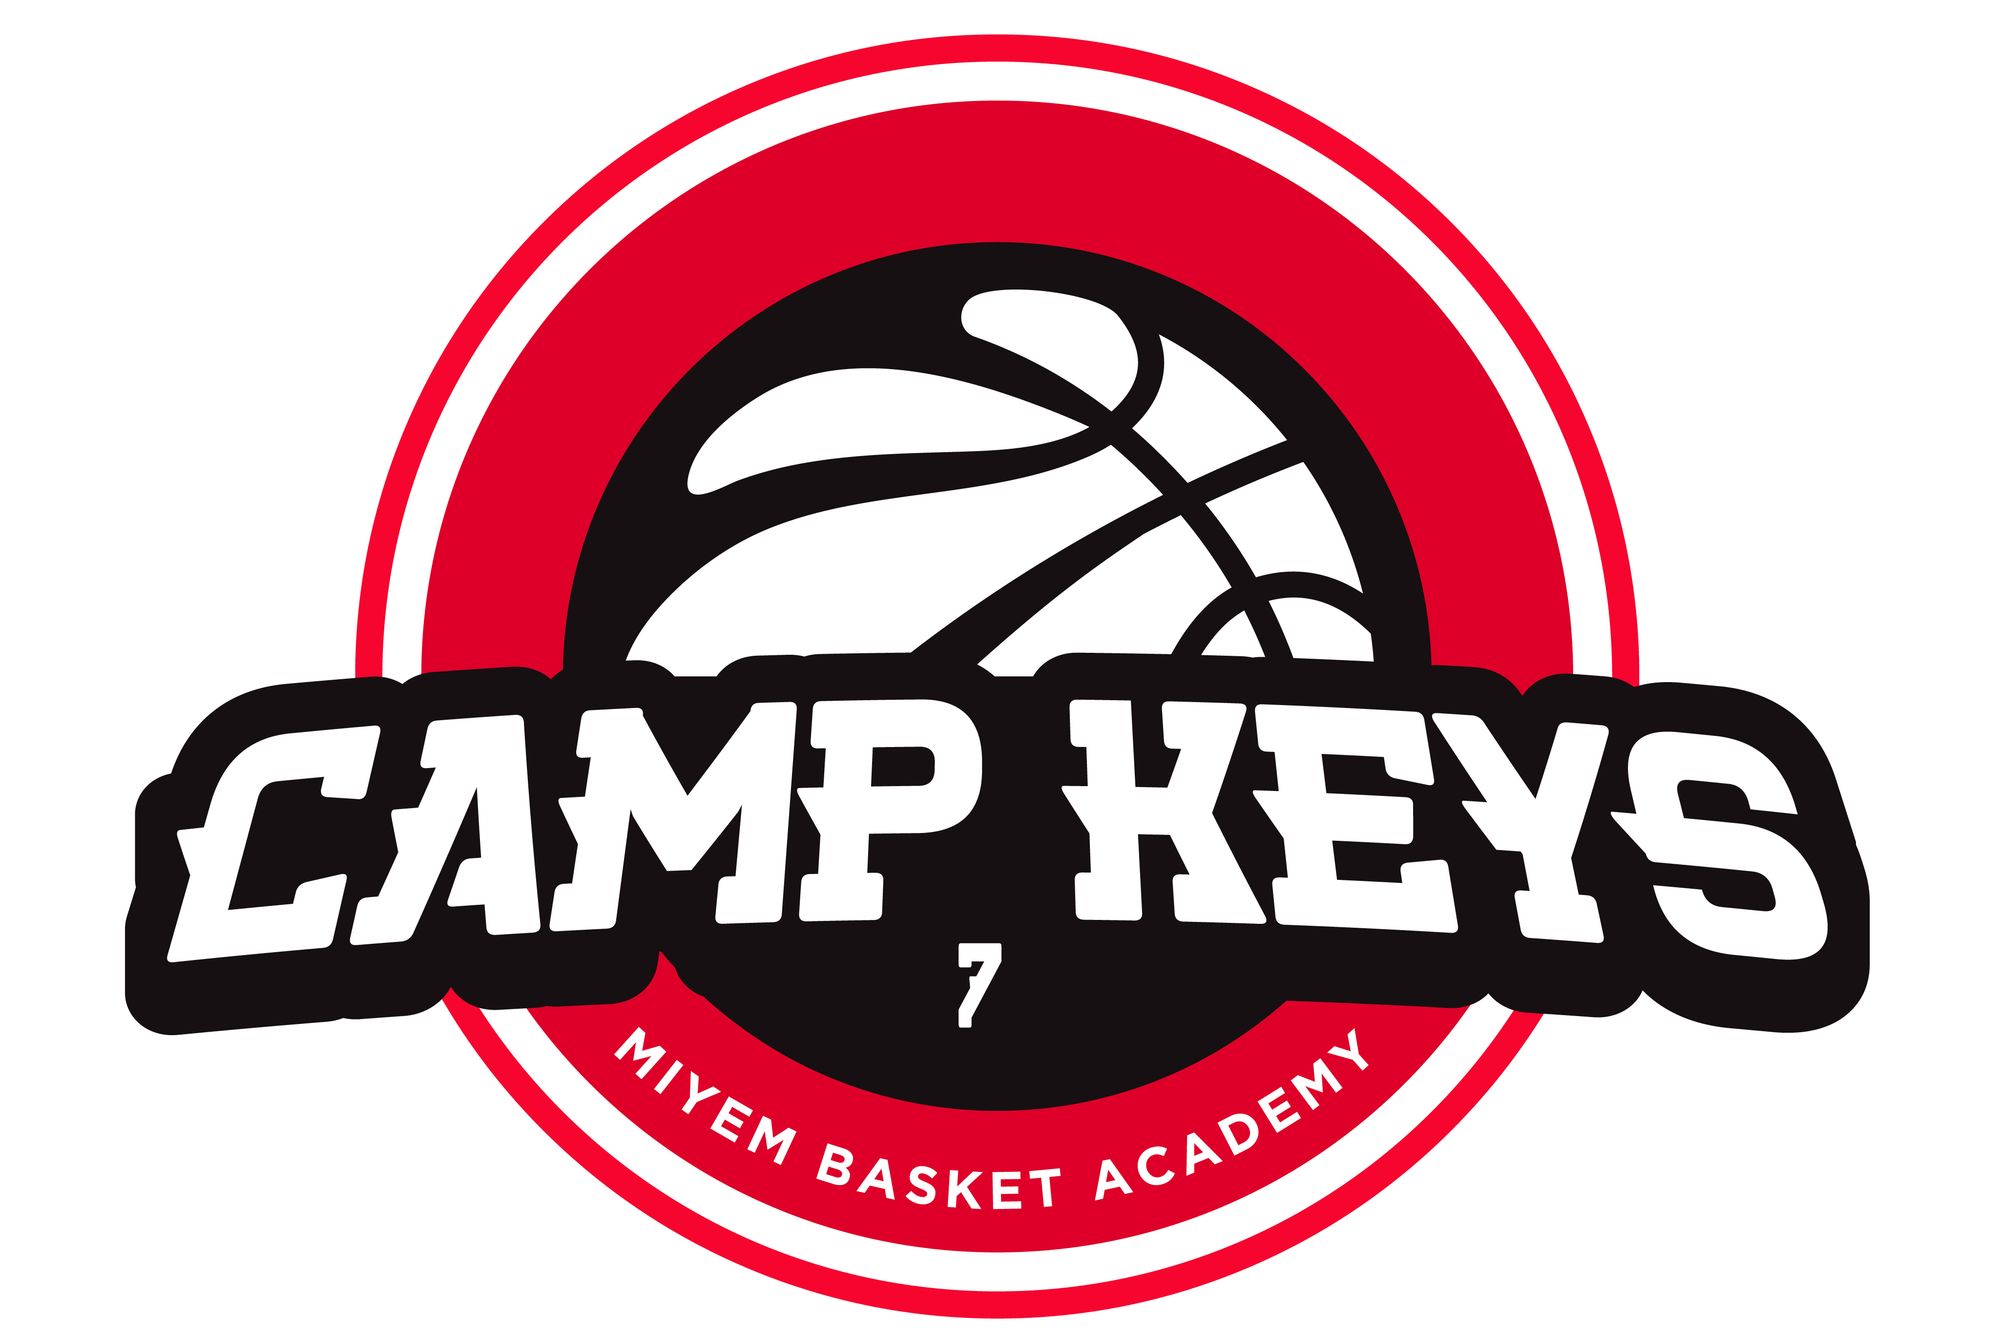 camps keys miyem basket academy logo